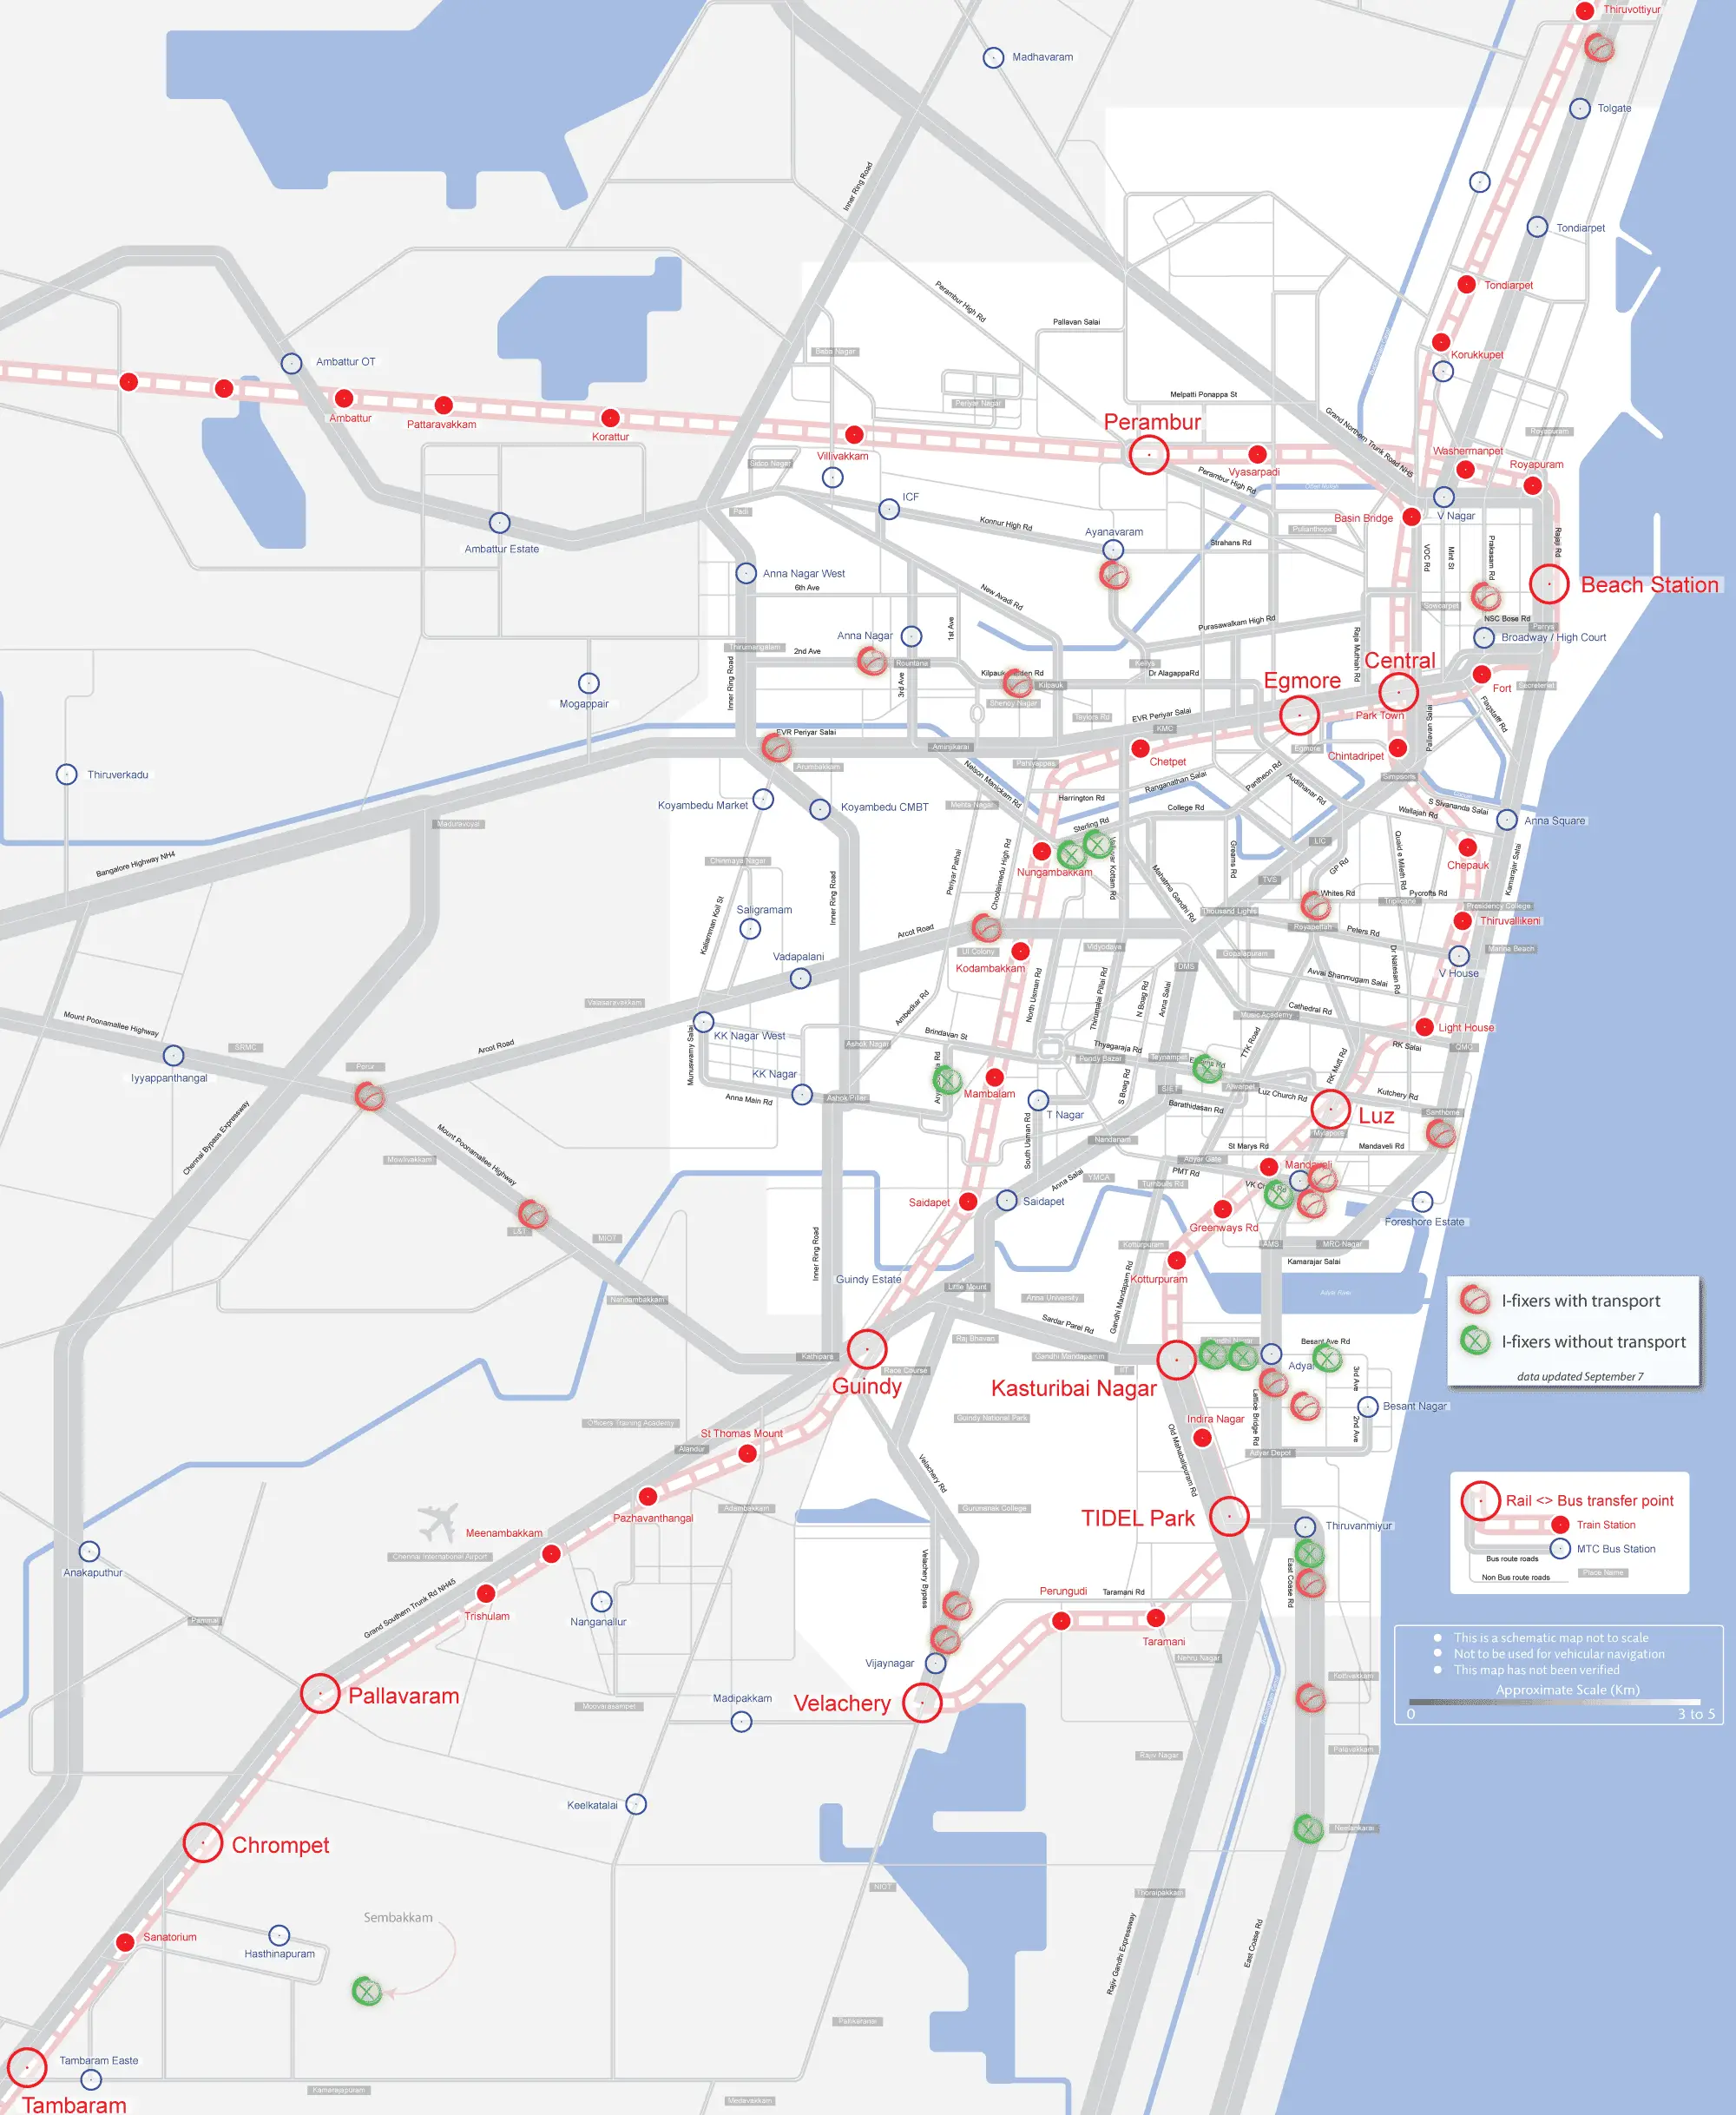 Transport Map of Chennai